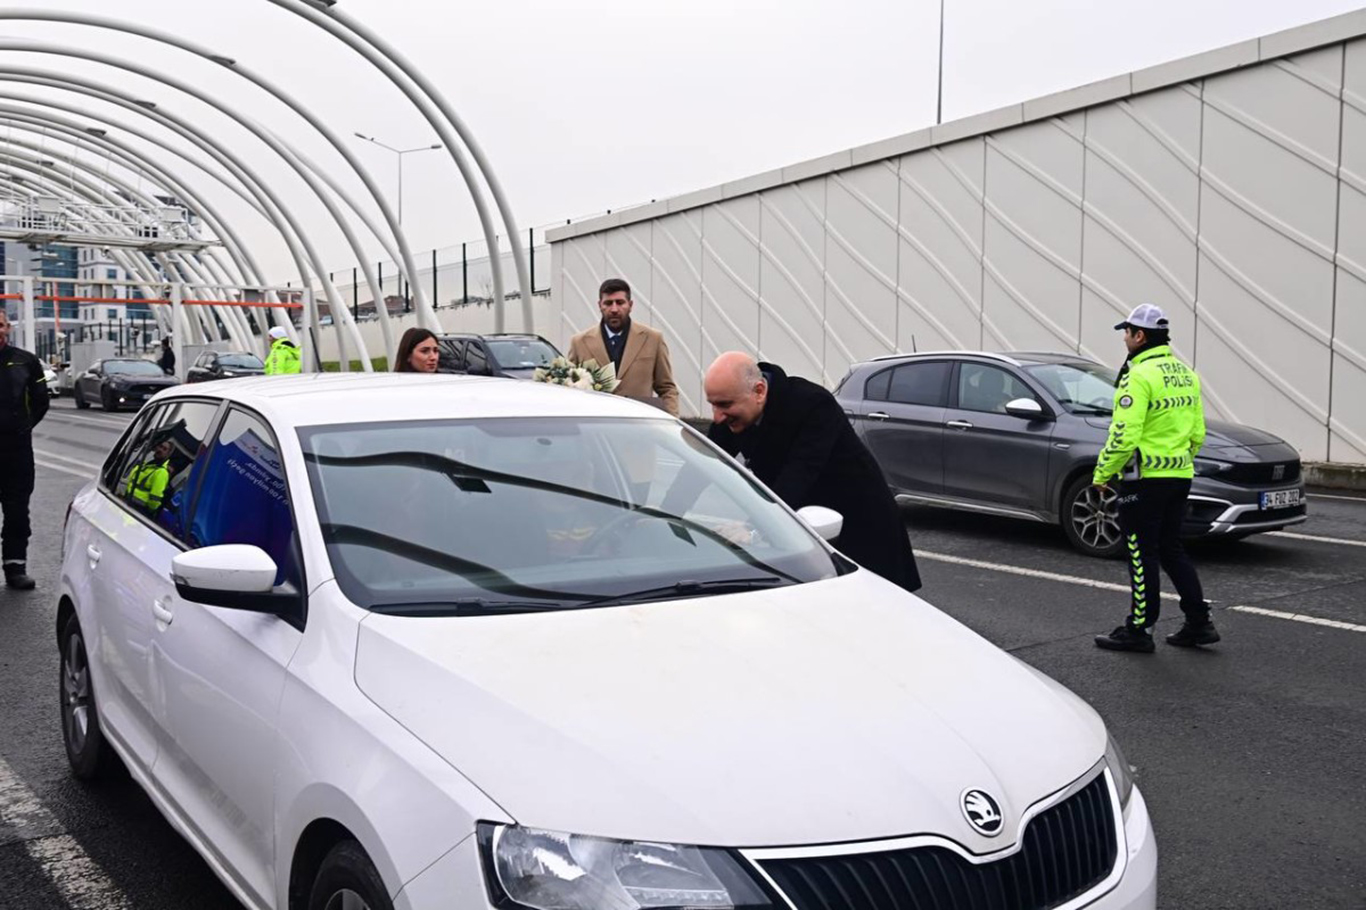 100 million vehicles pass through Eurasia Tunnel since inauguration